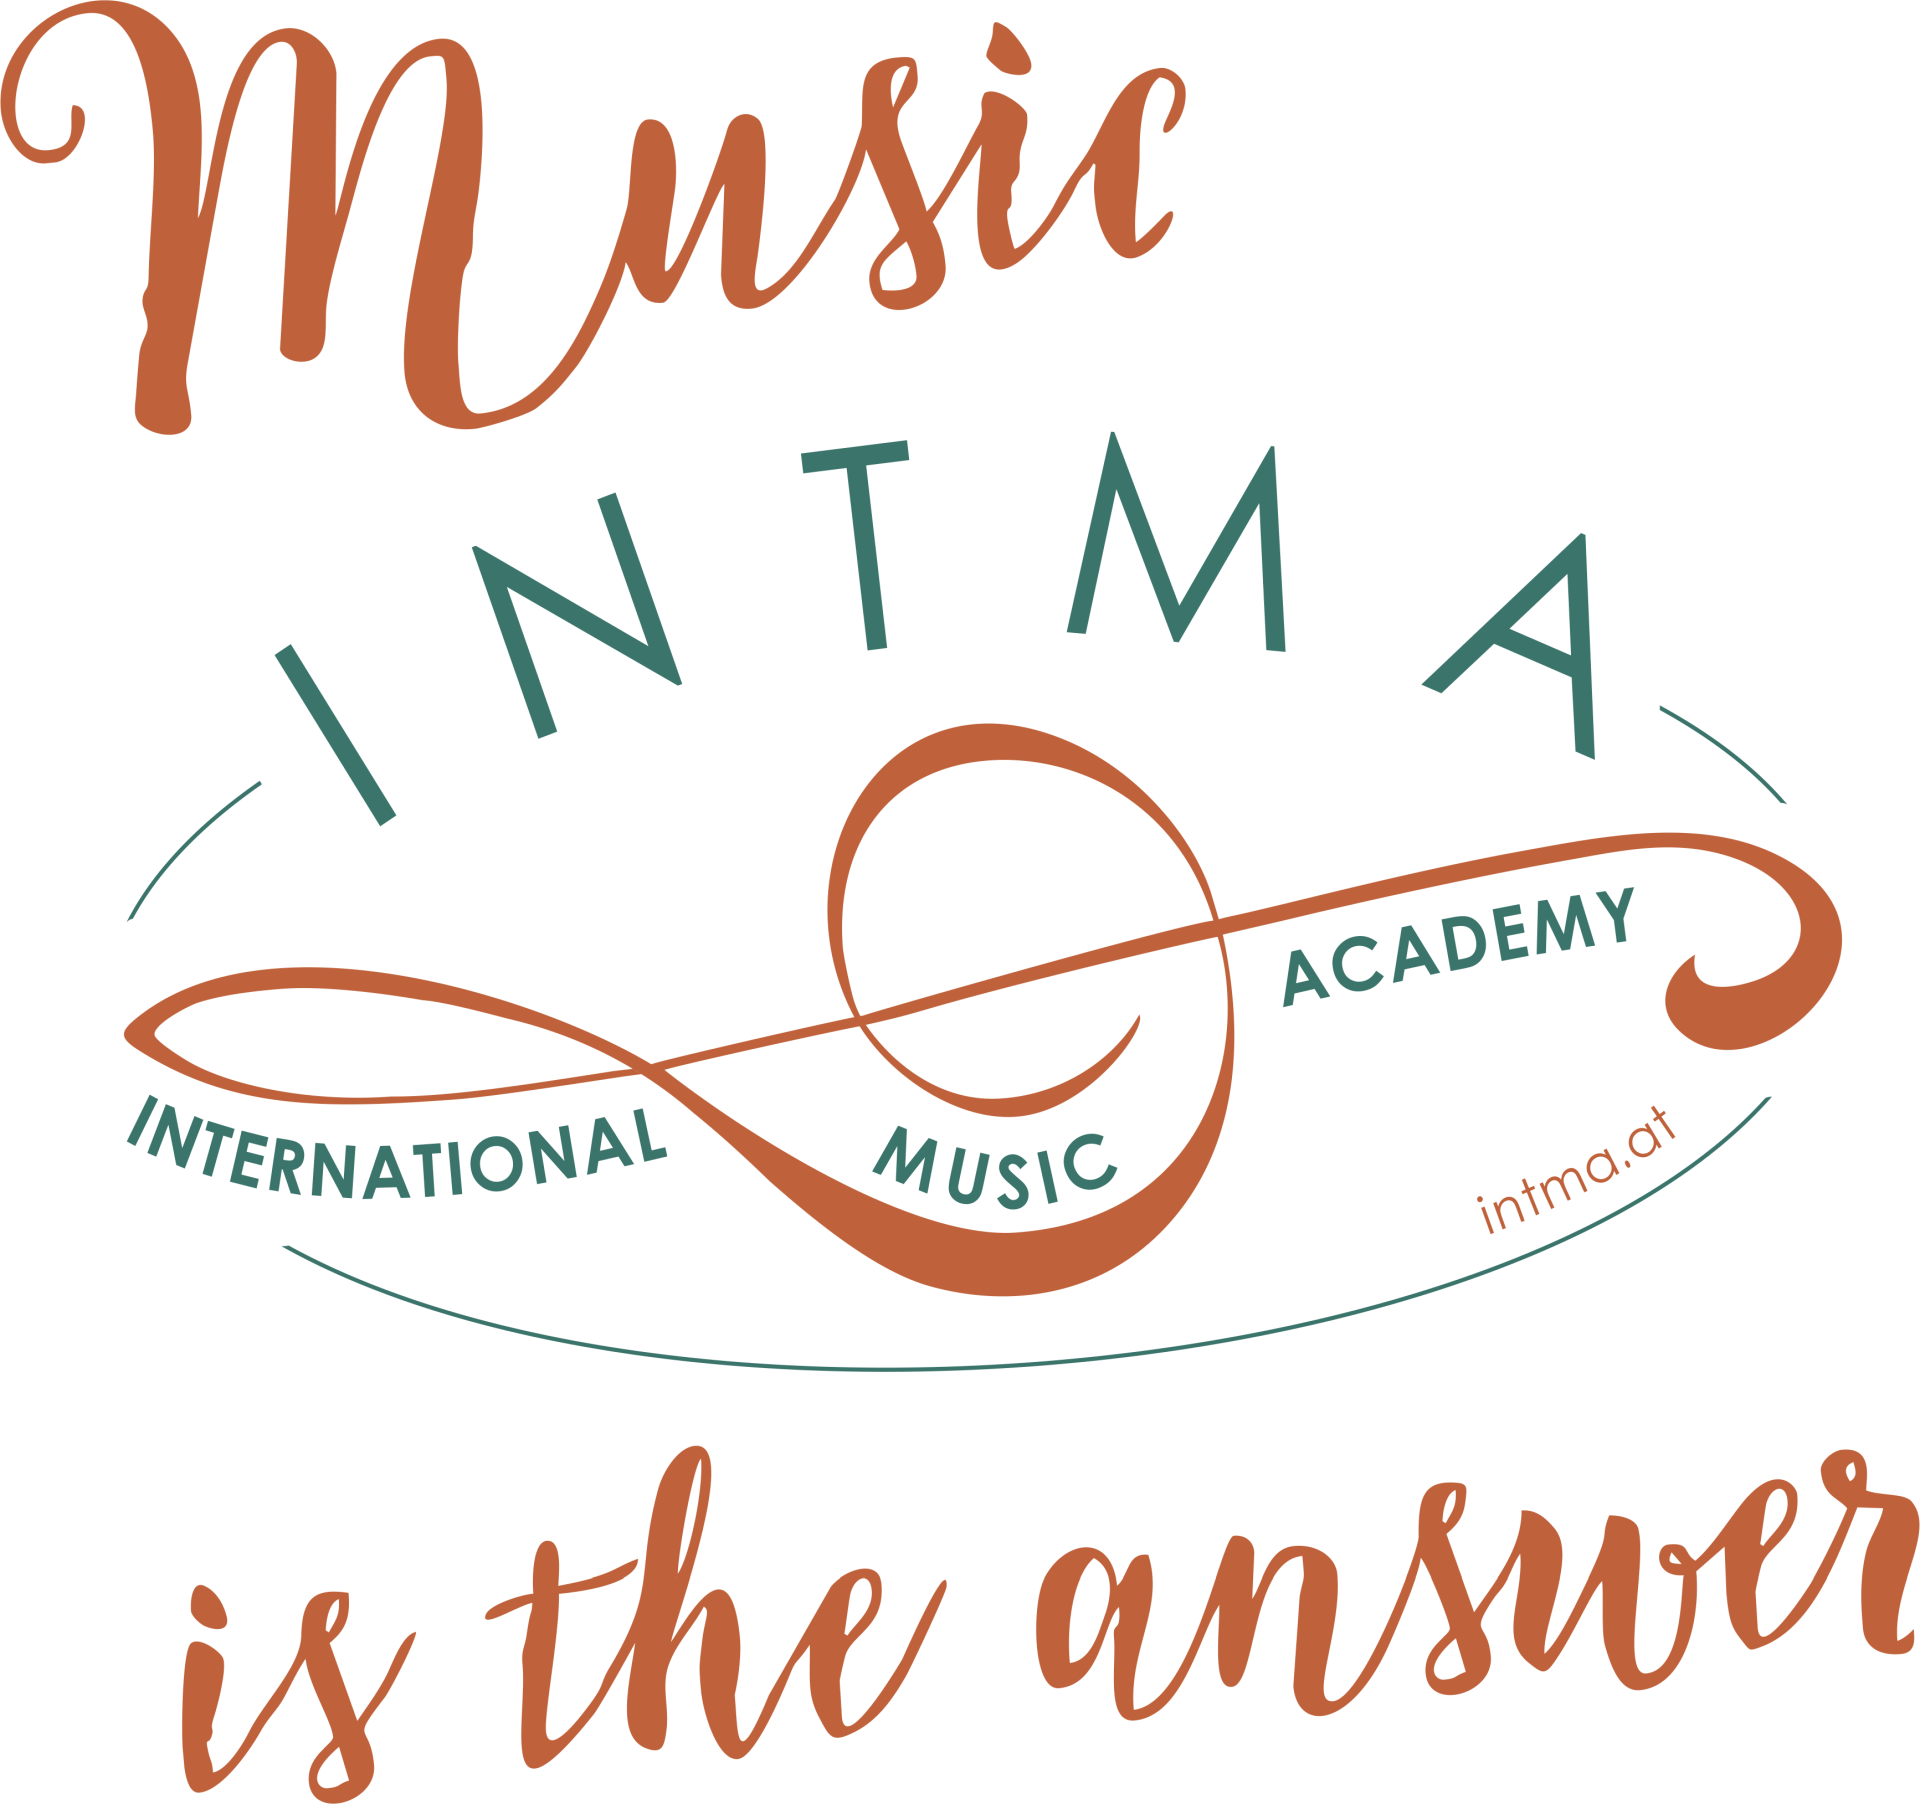 International Music Academy